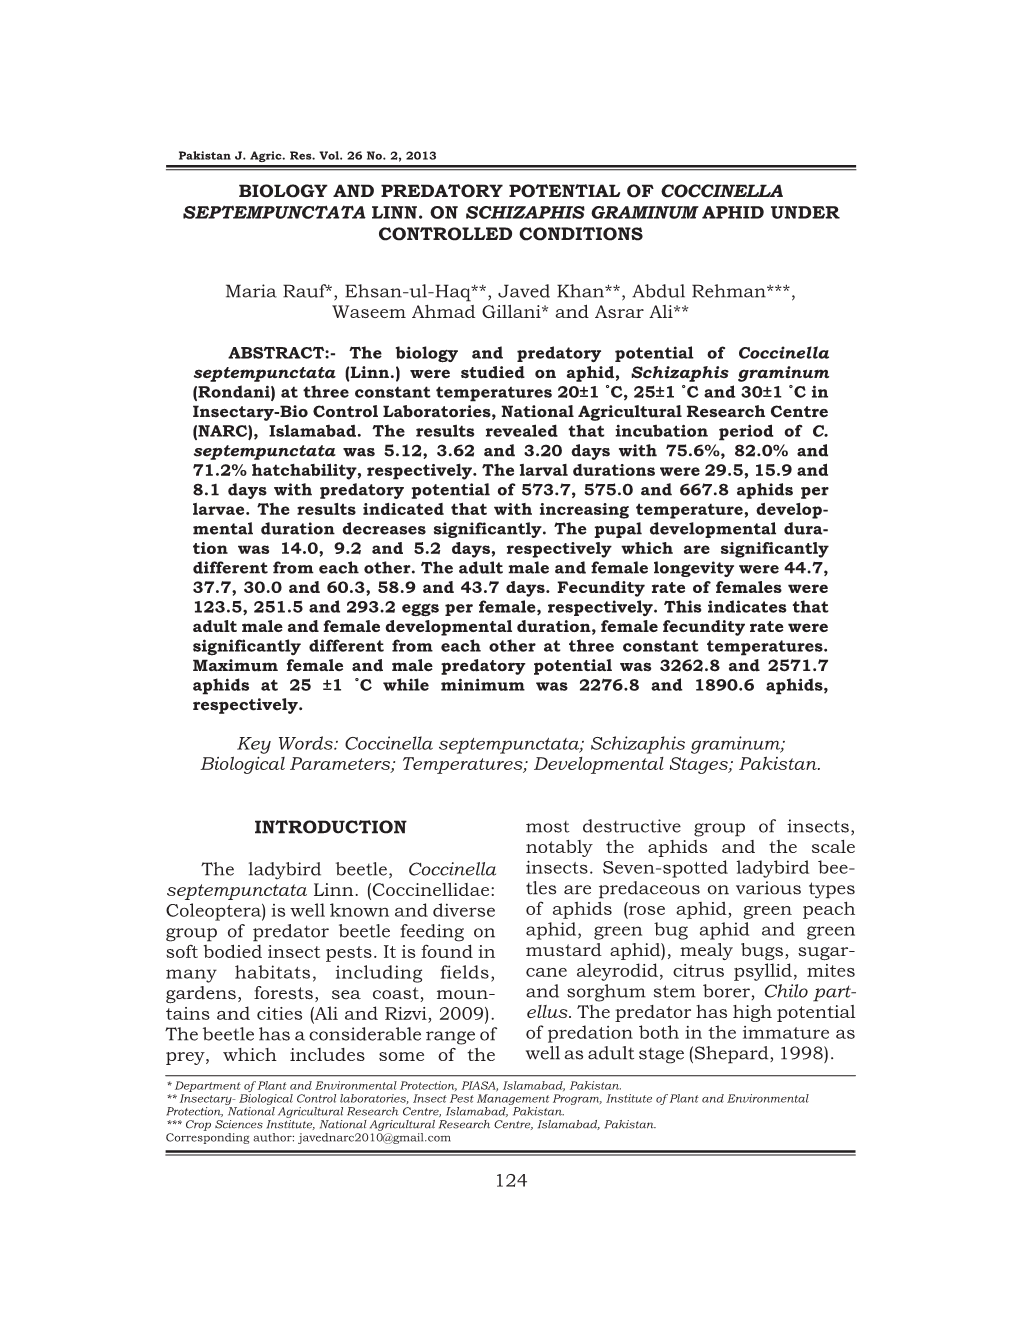 Biology and Predatory Potential of Coccinella Septempunctata Linn